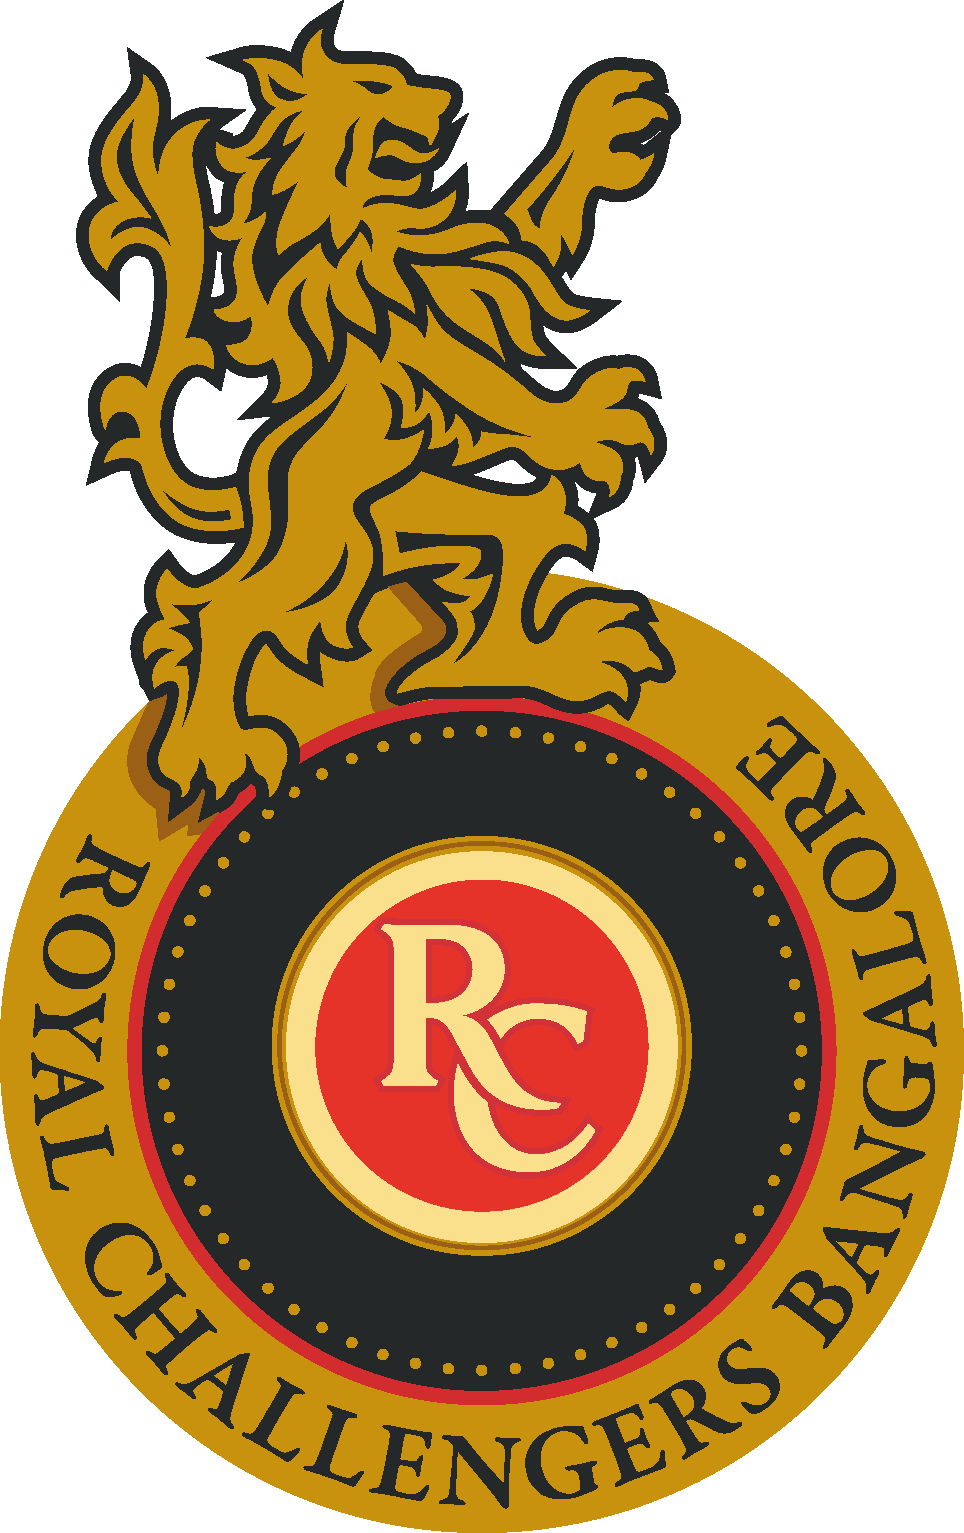 Official logo of RCB